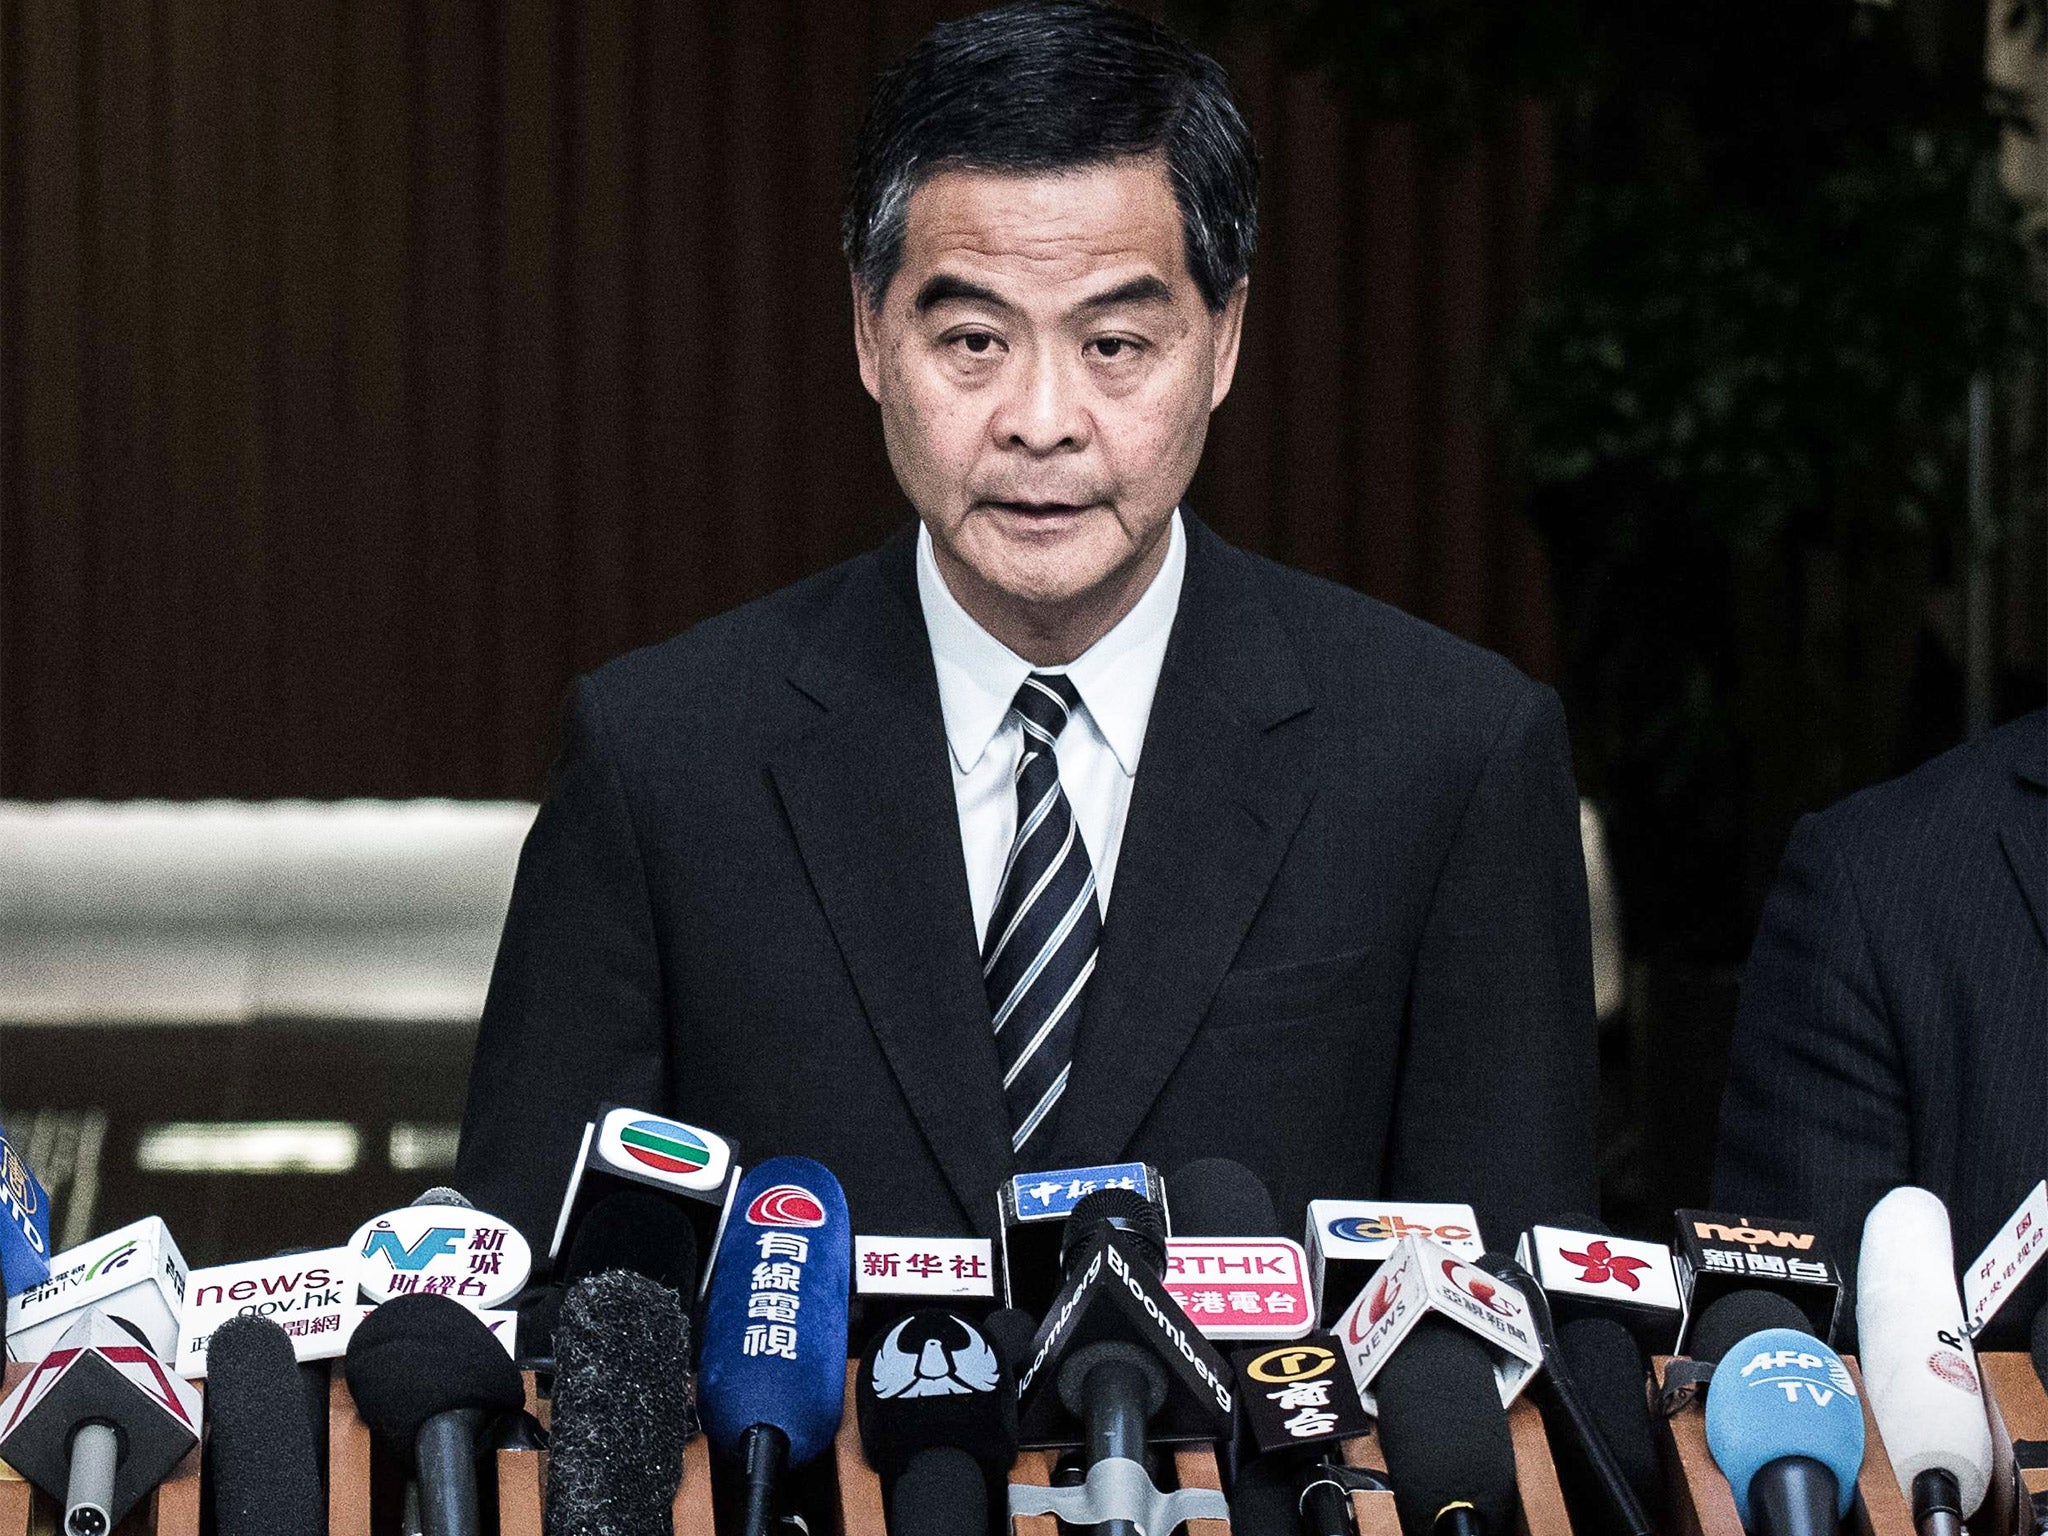 Hong Kong Chief Executive Leung Chun-ying